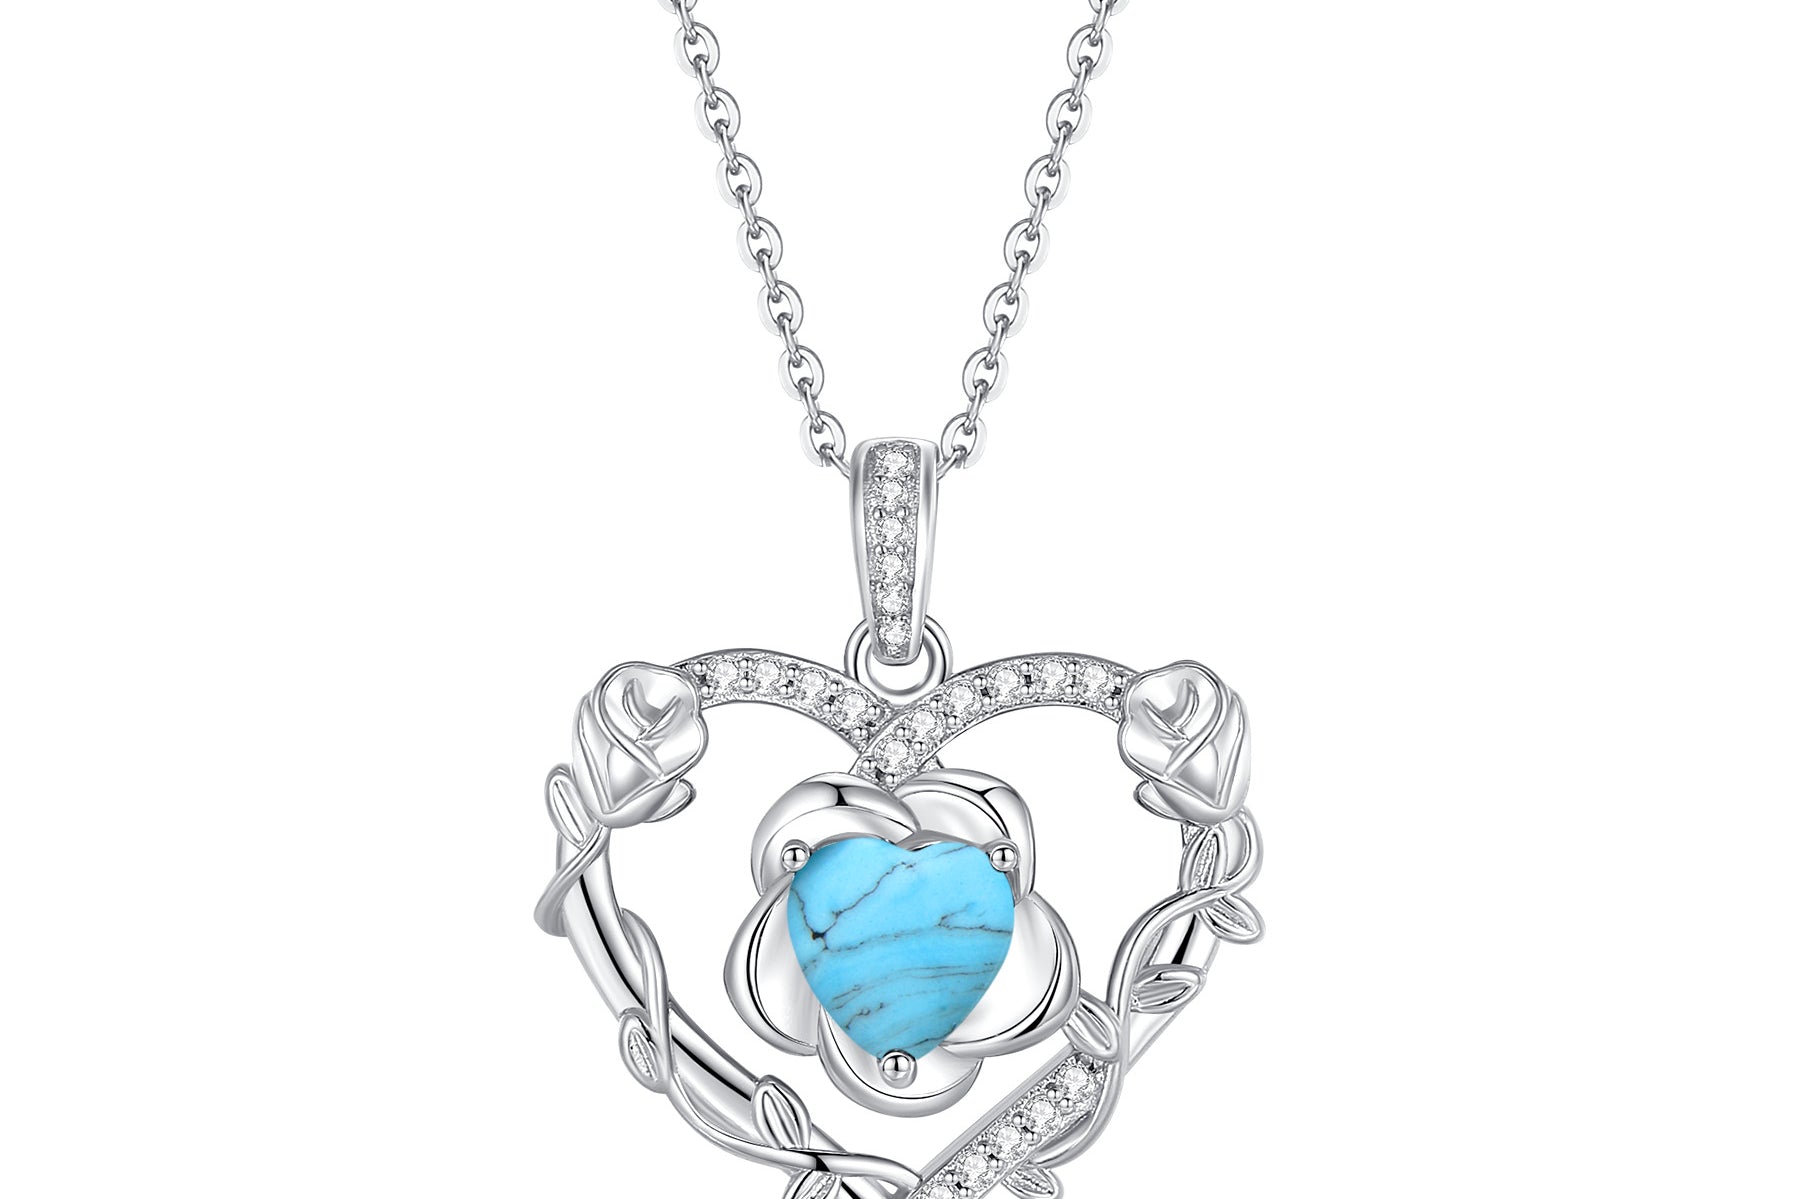 Agvana "Bloomist Heart" Birthstone Gemstone Sterling Silver Necklace